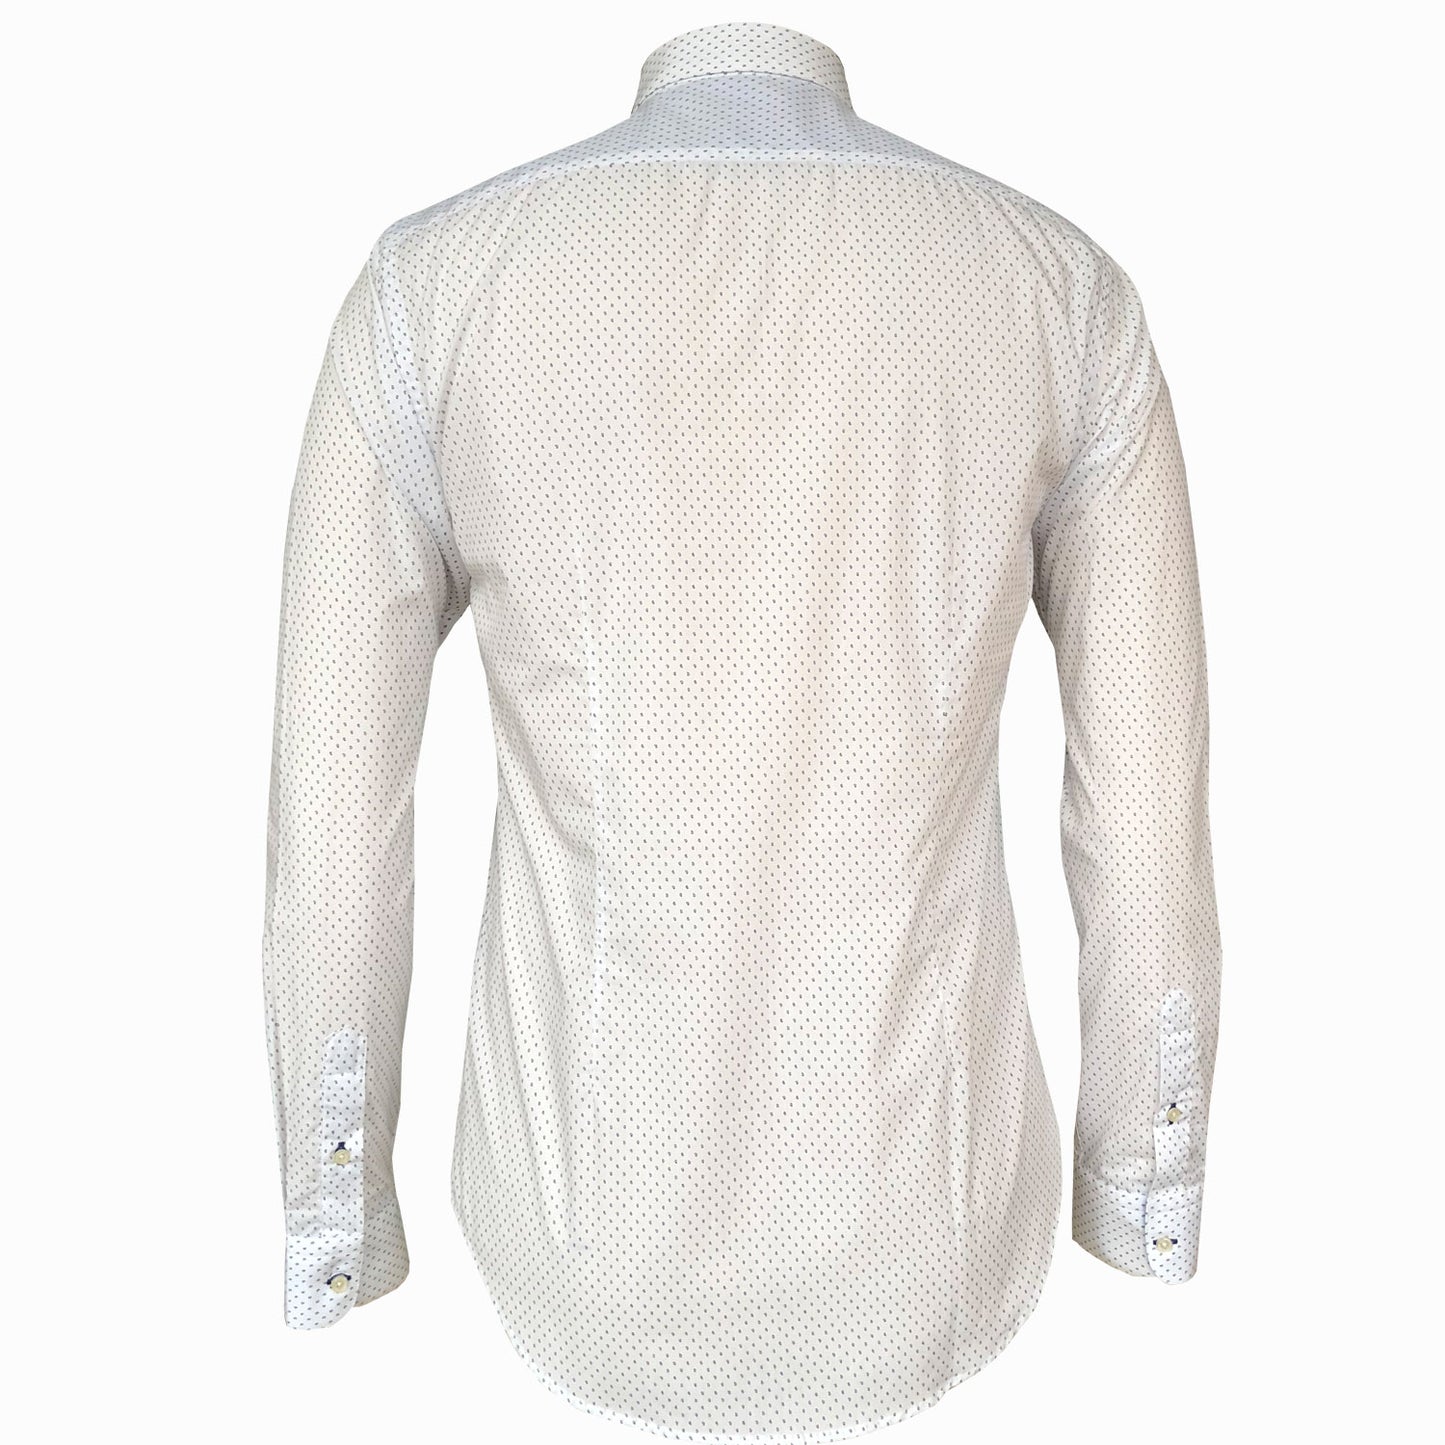 LUXE HOMME SELECT - Premium Oxford Long Sleeve Shirt (Edwin) - LabelledUp.com